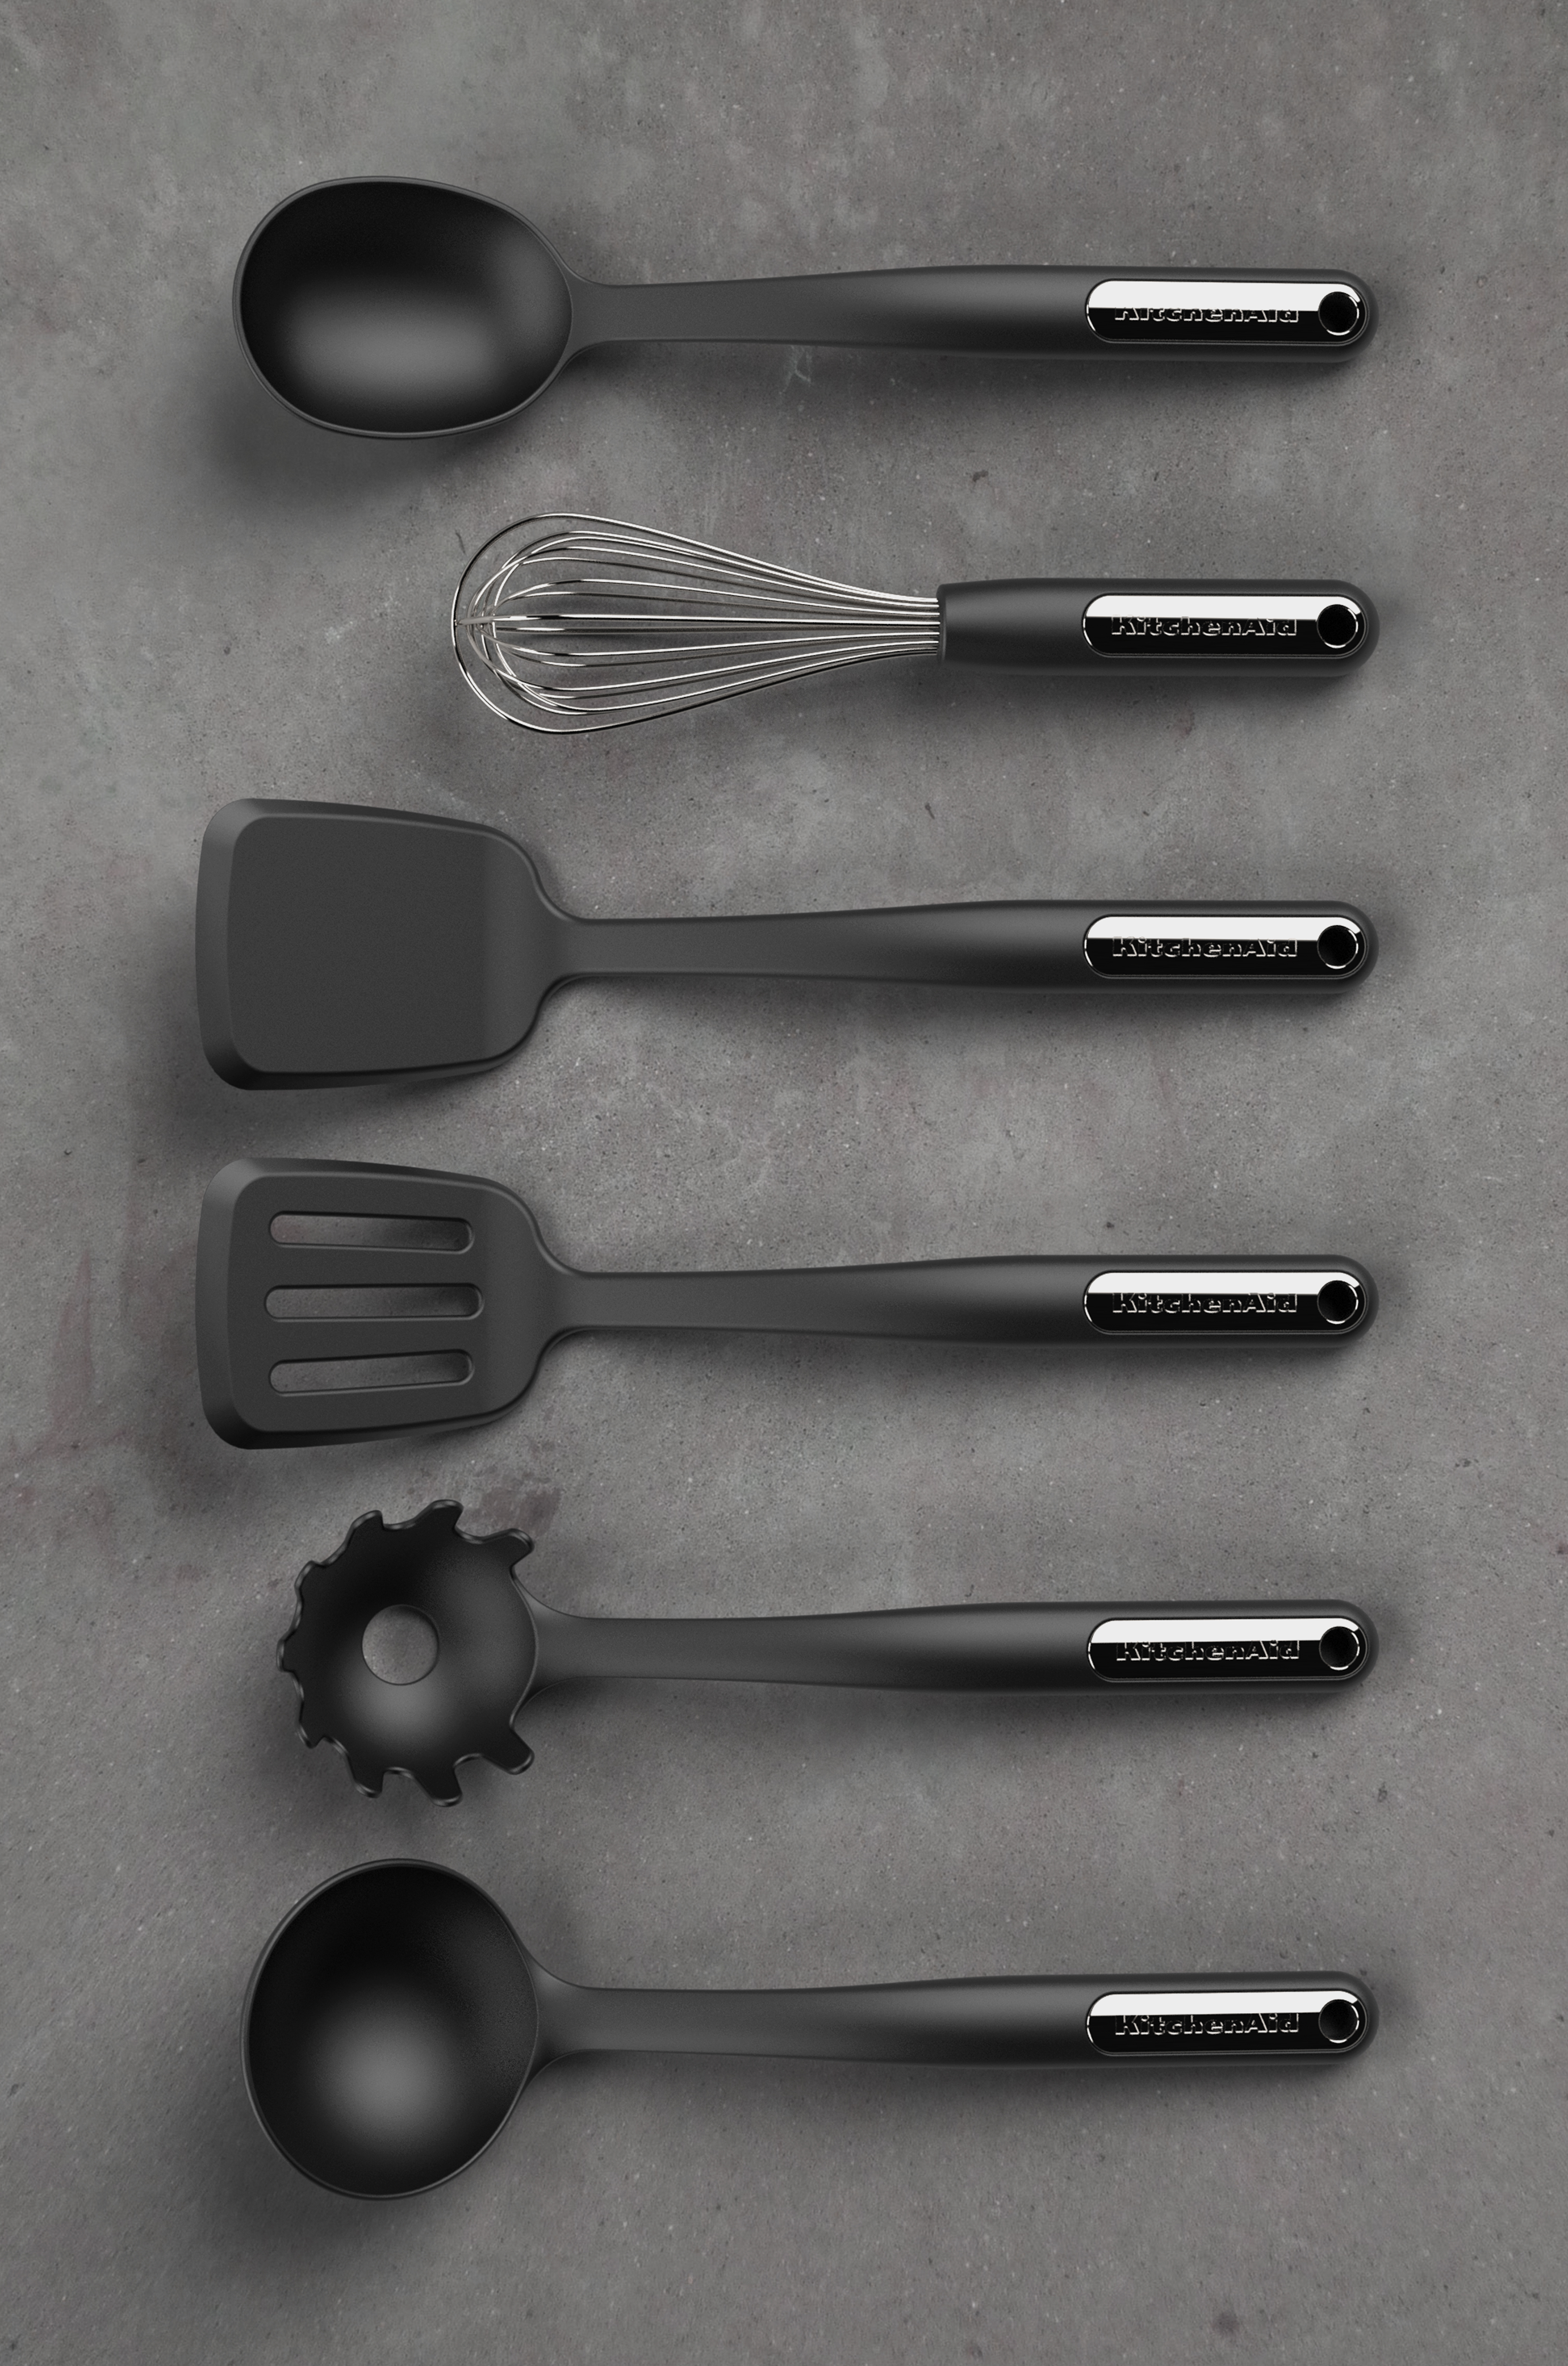 KitchenAid - utensils on Behance